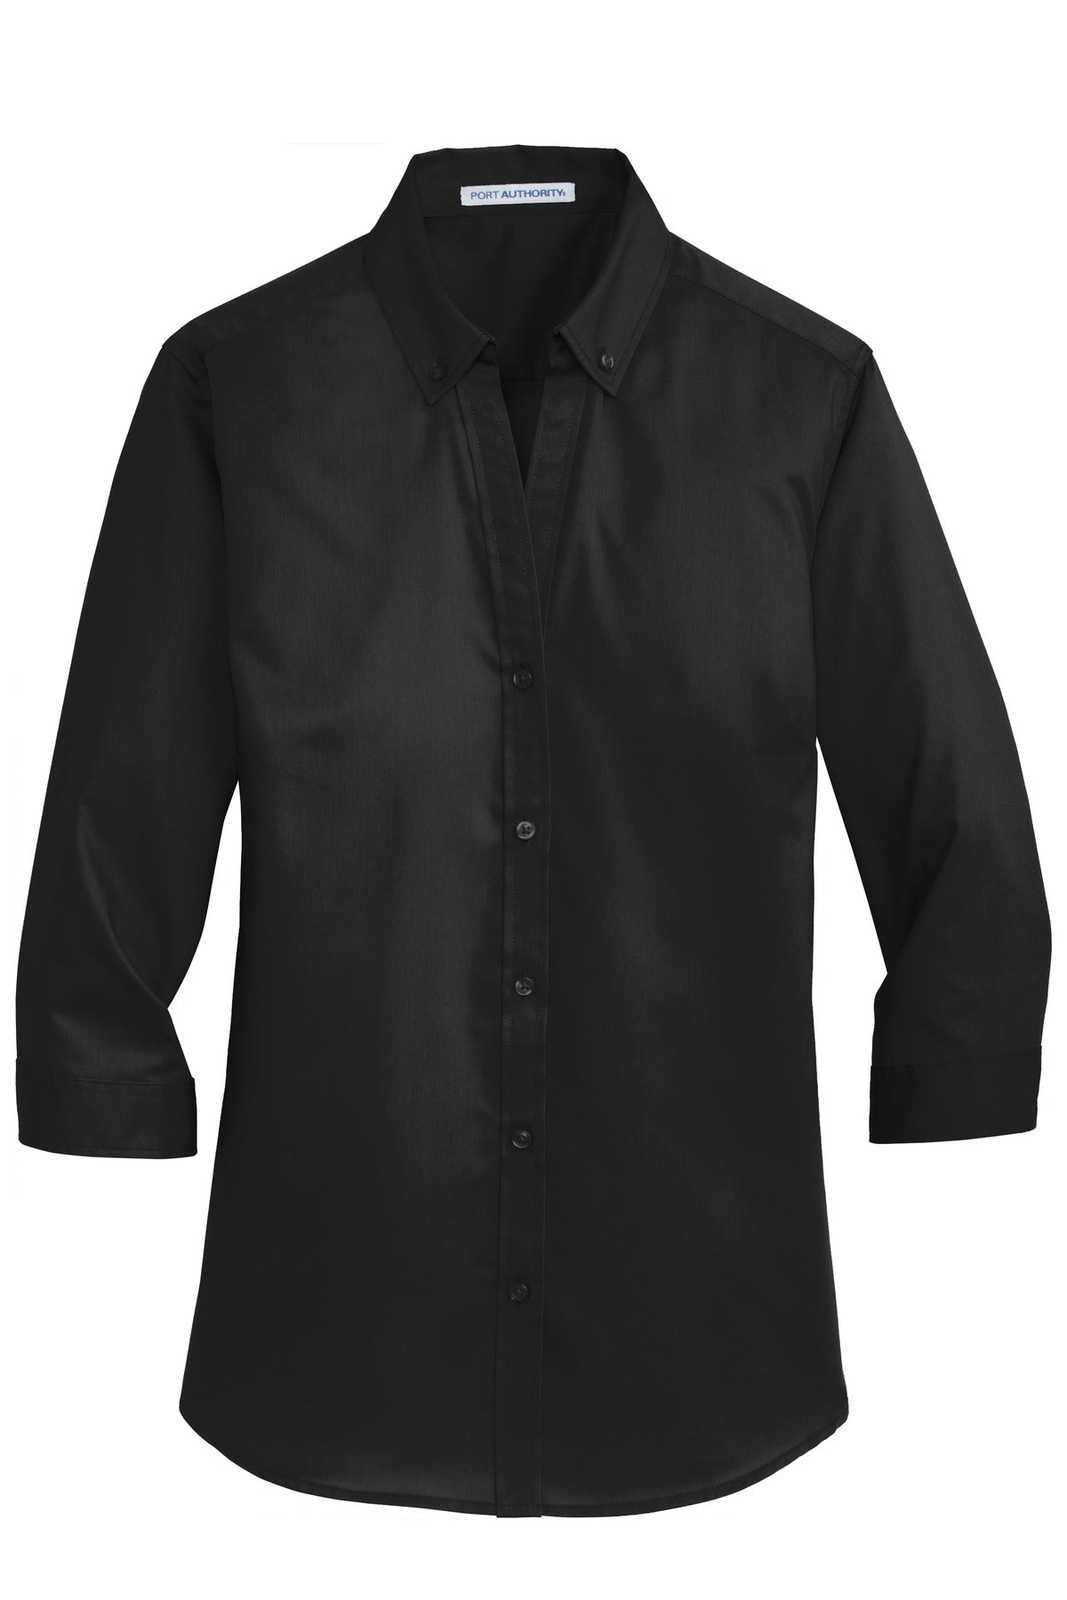 Port Authority L665 Ladies 3/4-Sleeve Superpro Twill Shirt - Black - HIT a Double - 5